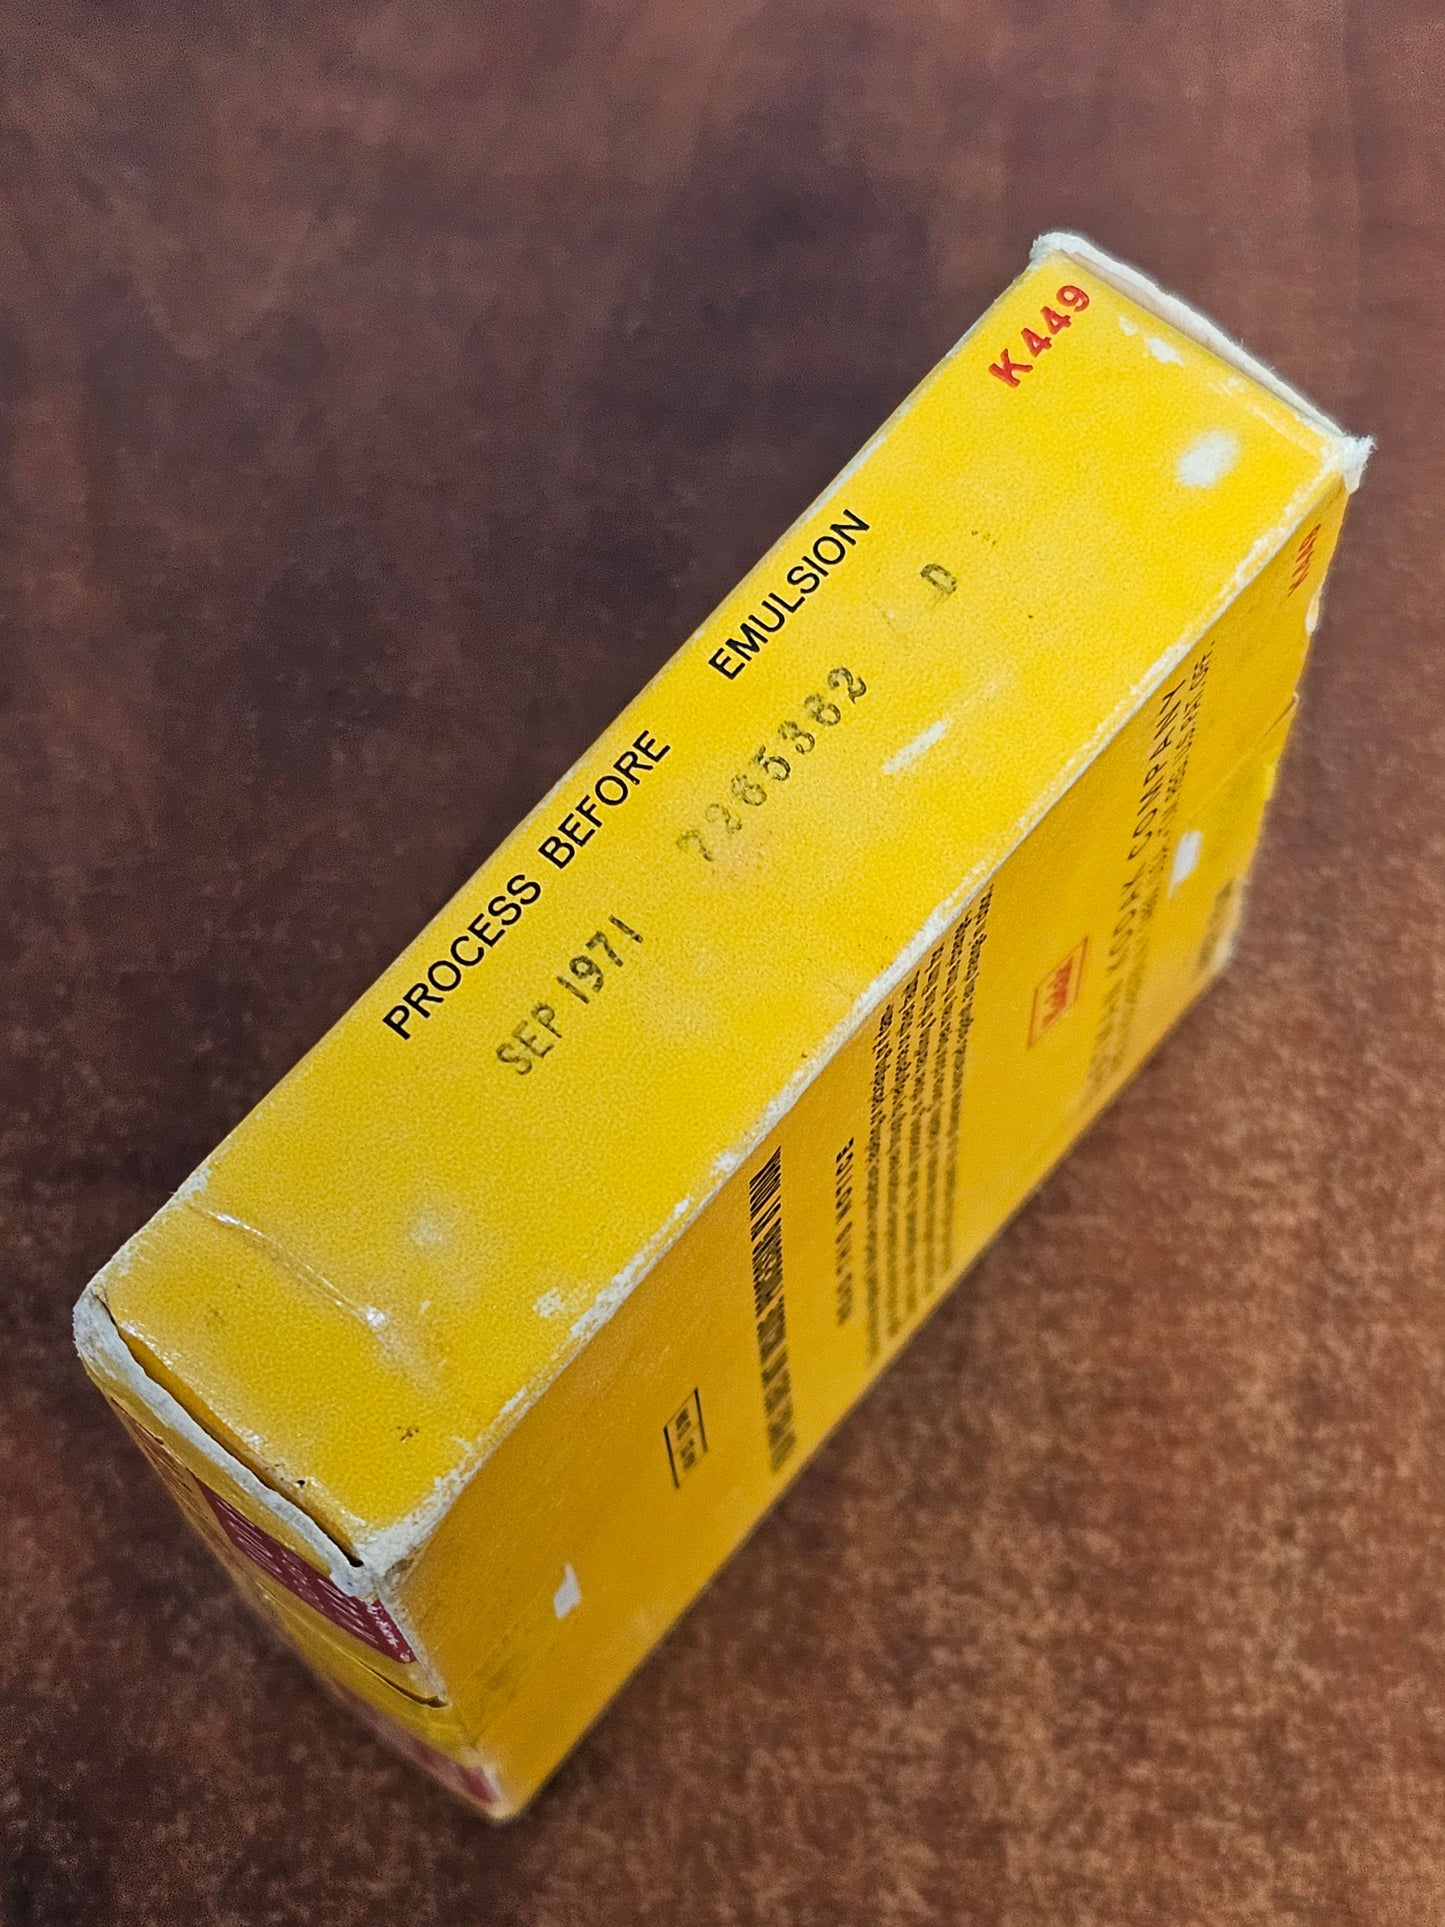 KODAK 16mm 100' Kodachrome II Color Safety Film ( Expired Stock )